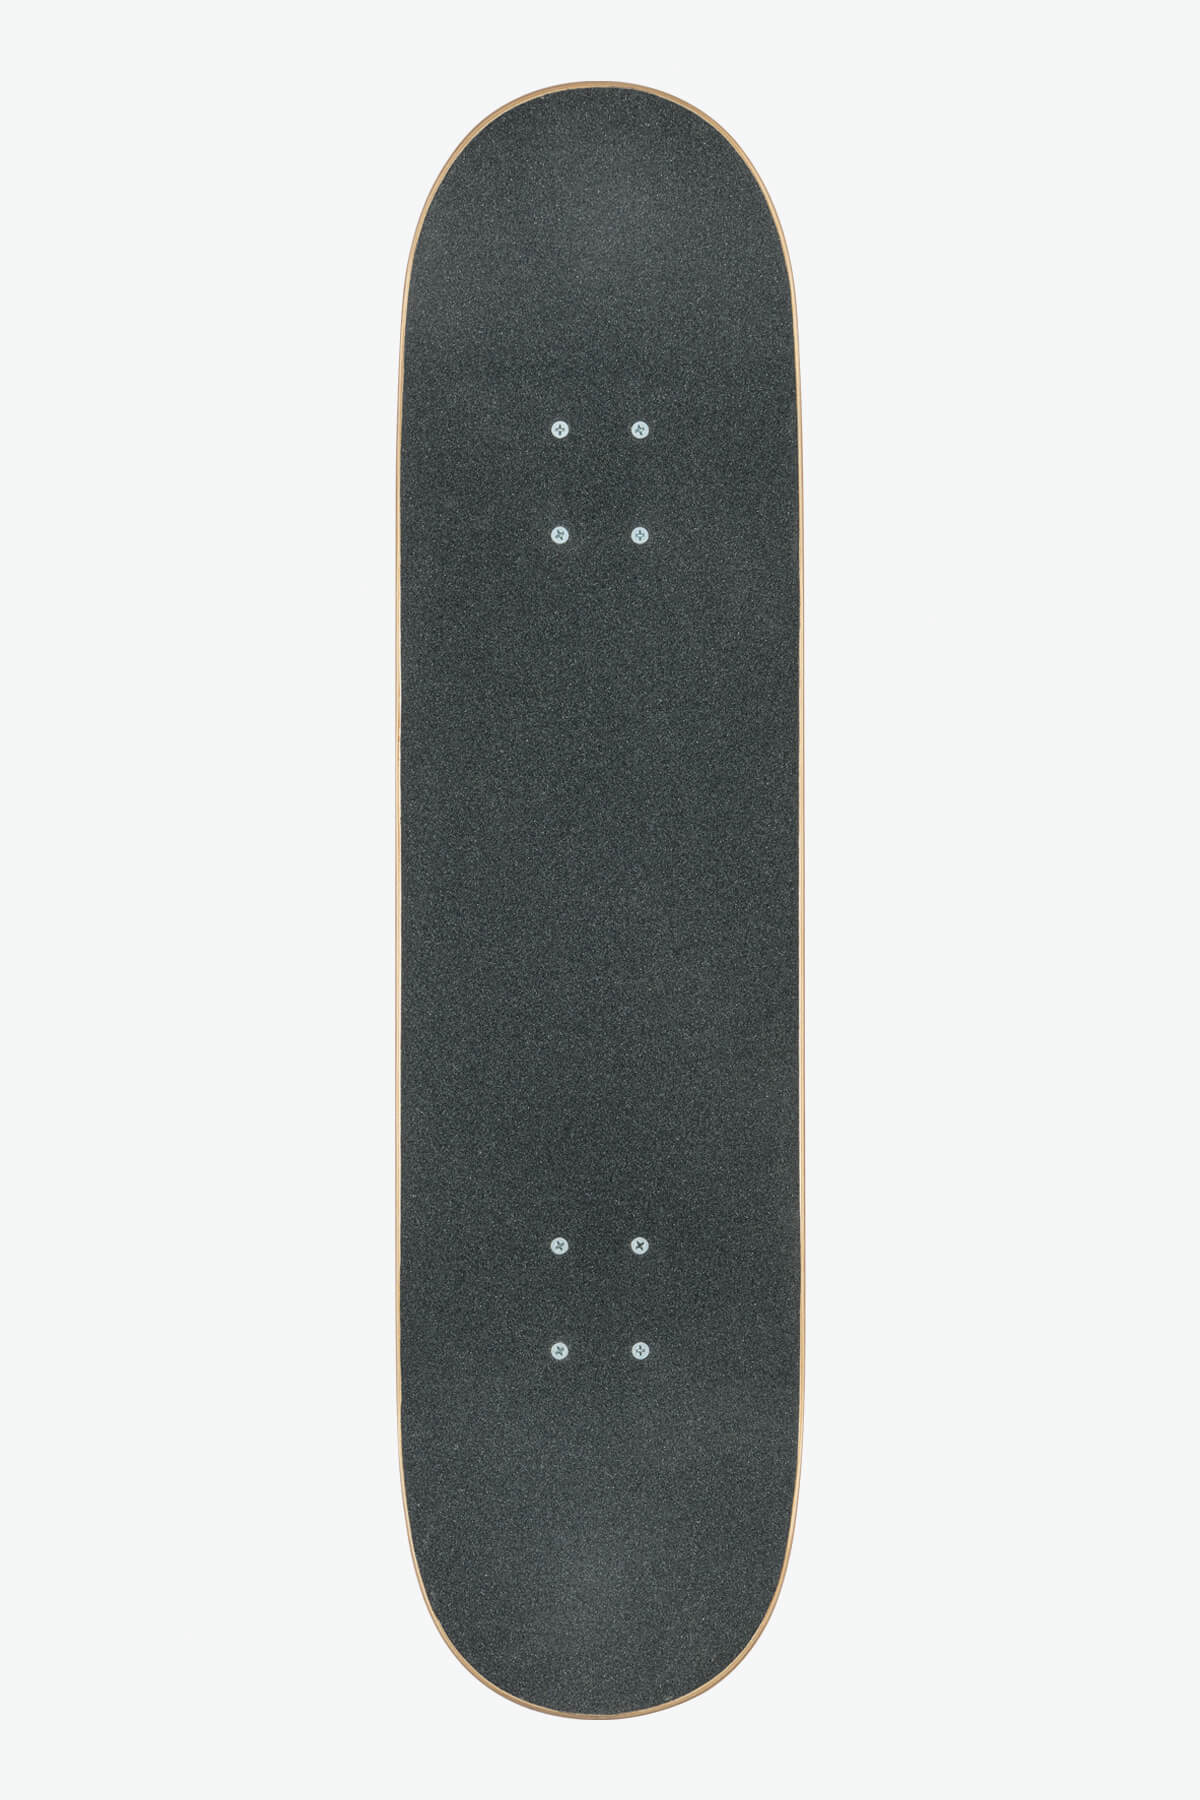 Globe - G0 Fubar - Haze/Off-White - 7.75" complet Skateboard